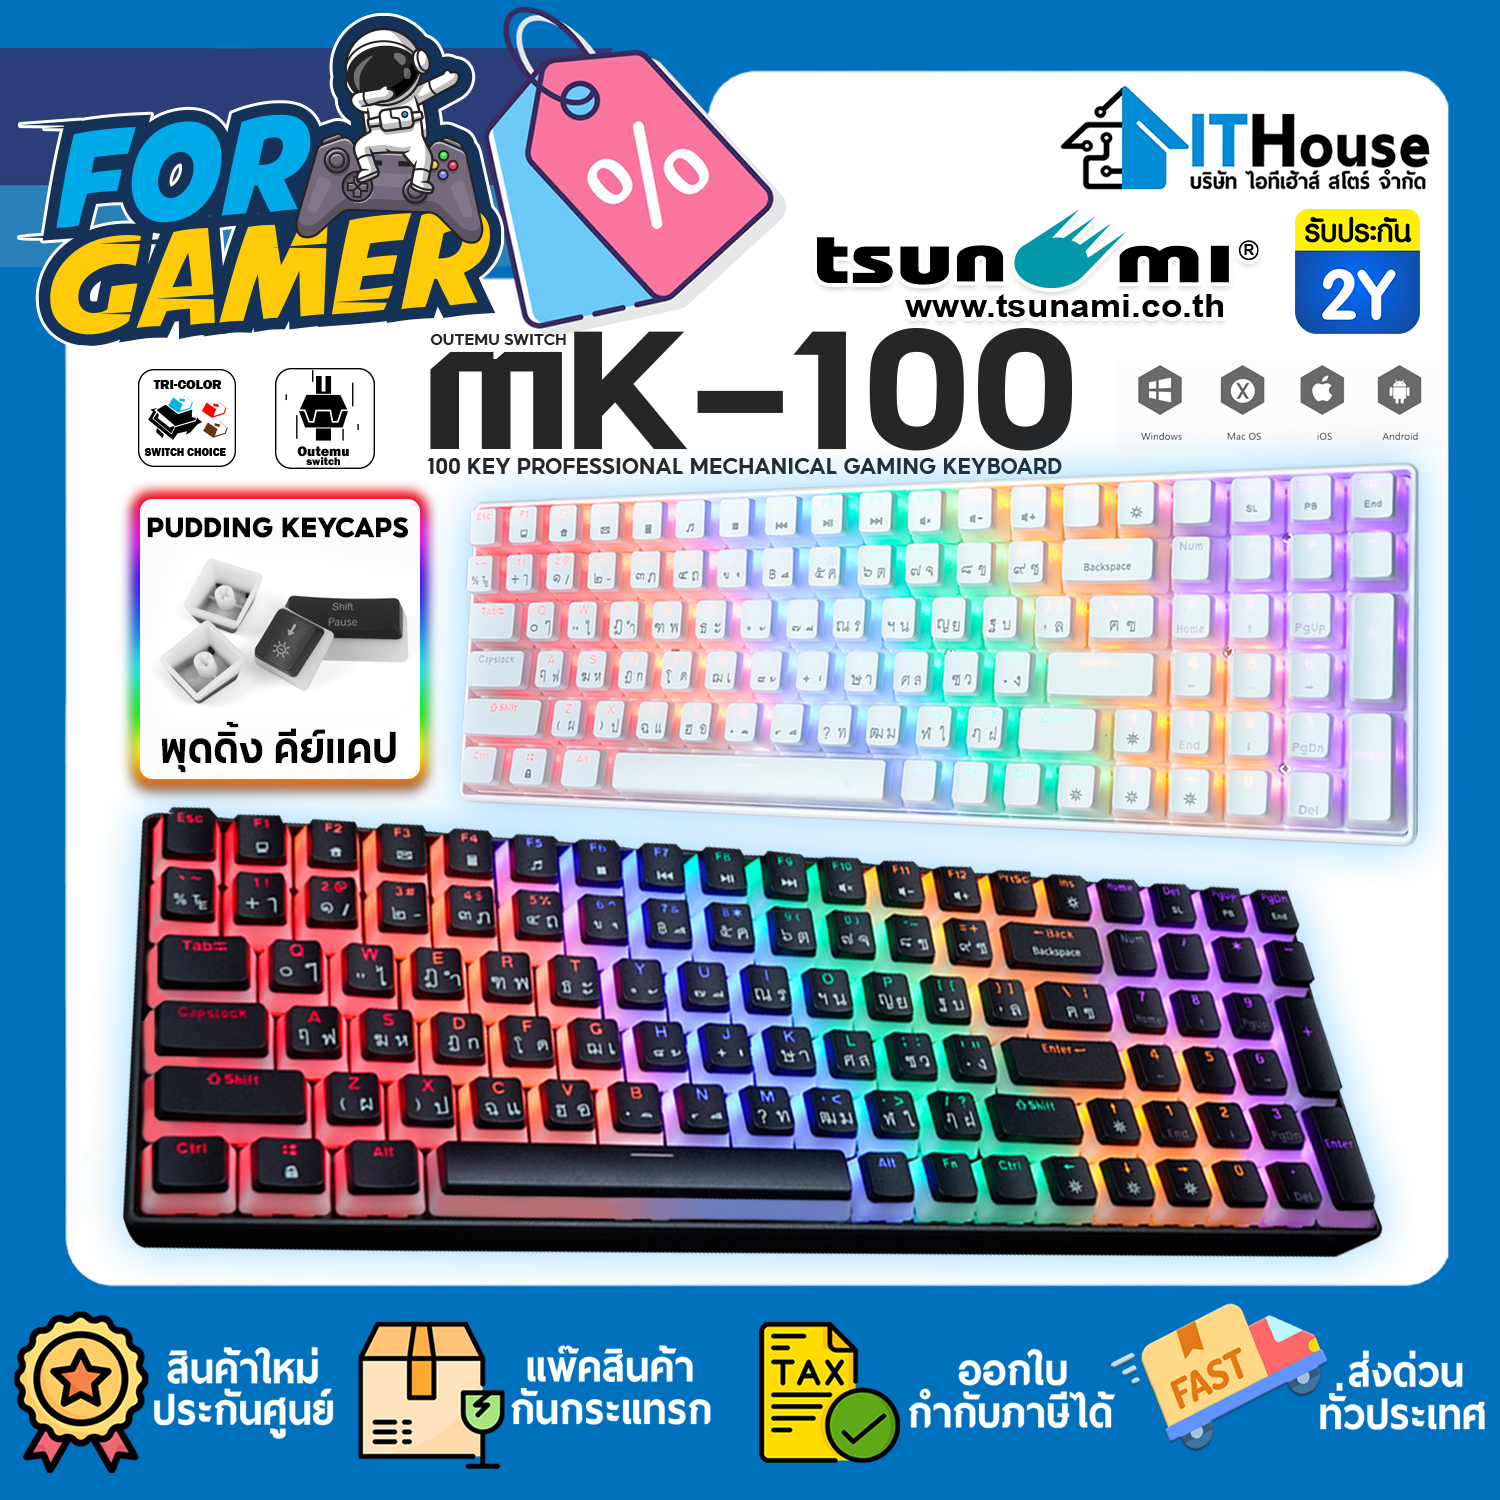 TSUNAMI OUTEMU PUDDING MK-100 Gaming Keyboard (MYSTIC BLACK RED)